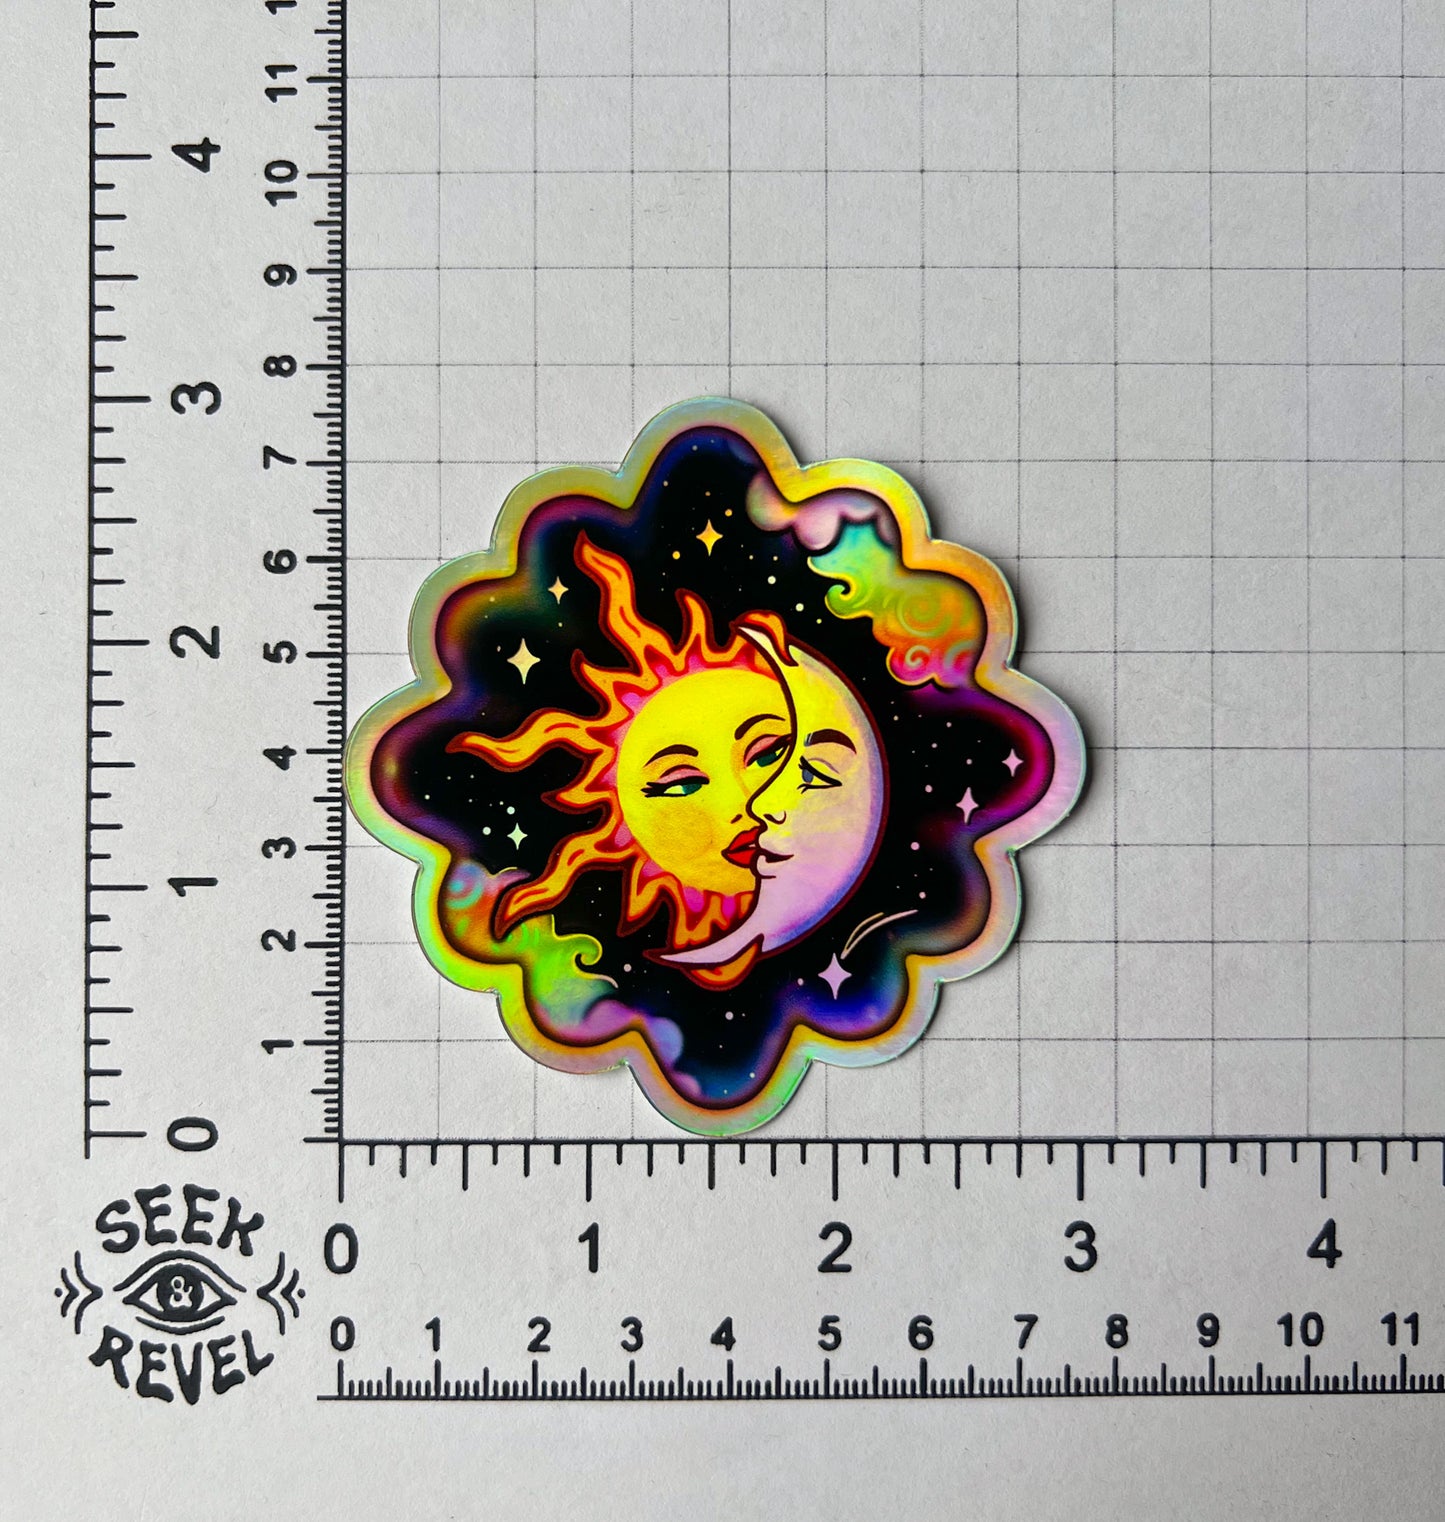 𝐍𝐄𝐖: Rare Sticker 𖦹 Sun & Moon